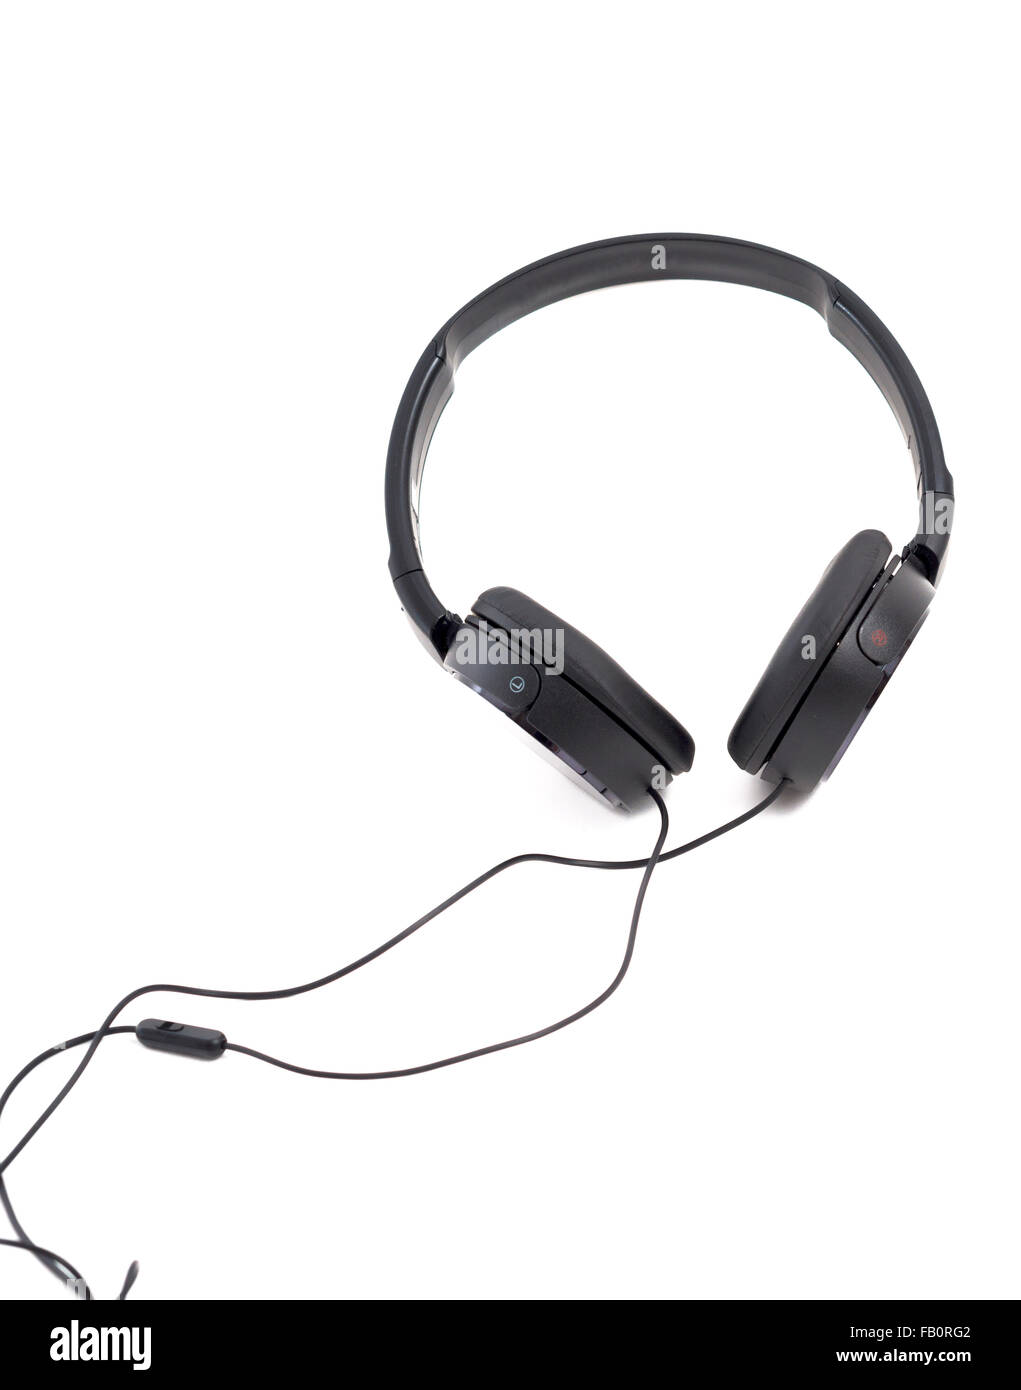 Headphones isolated on white background Stock Photo